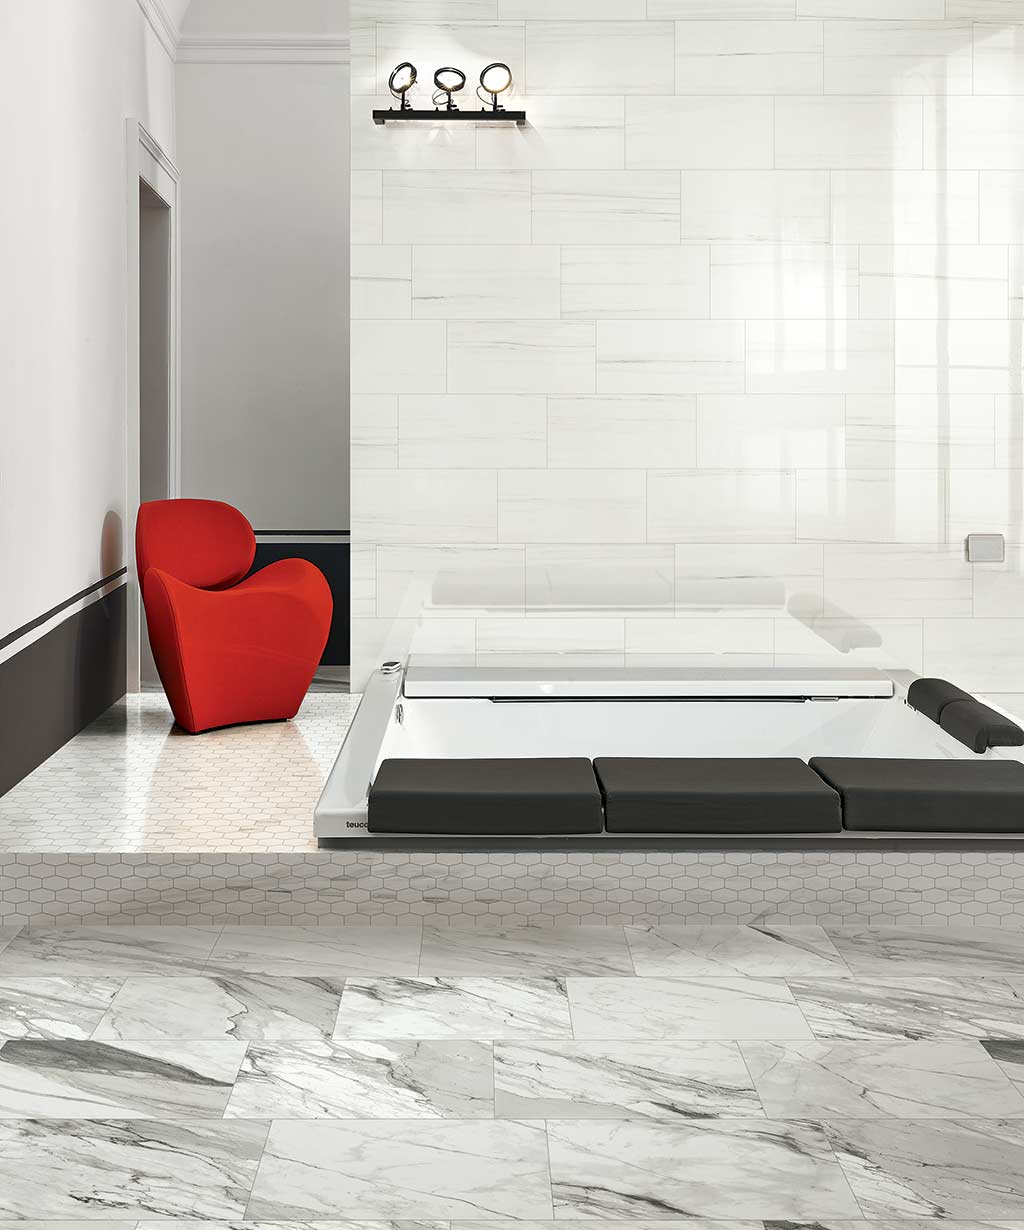 Epic_Apuano_Floor_Dolomite_Wall_Bathroom_Install002